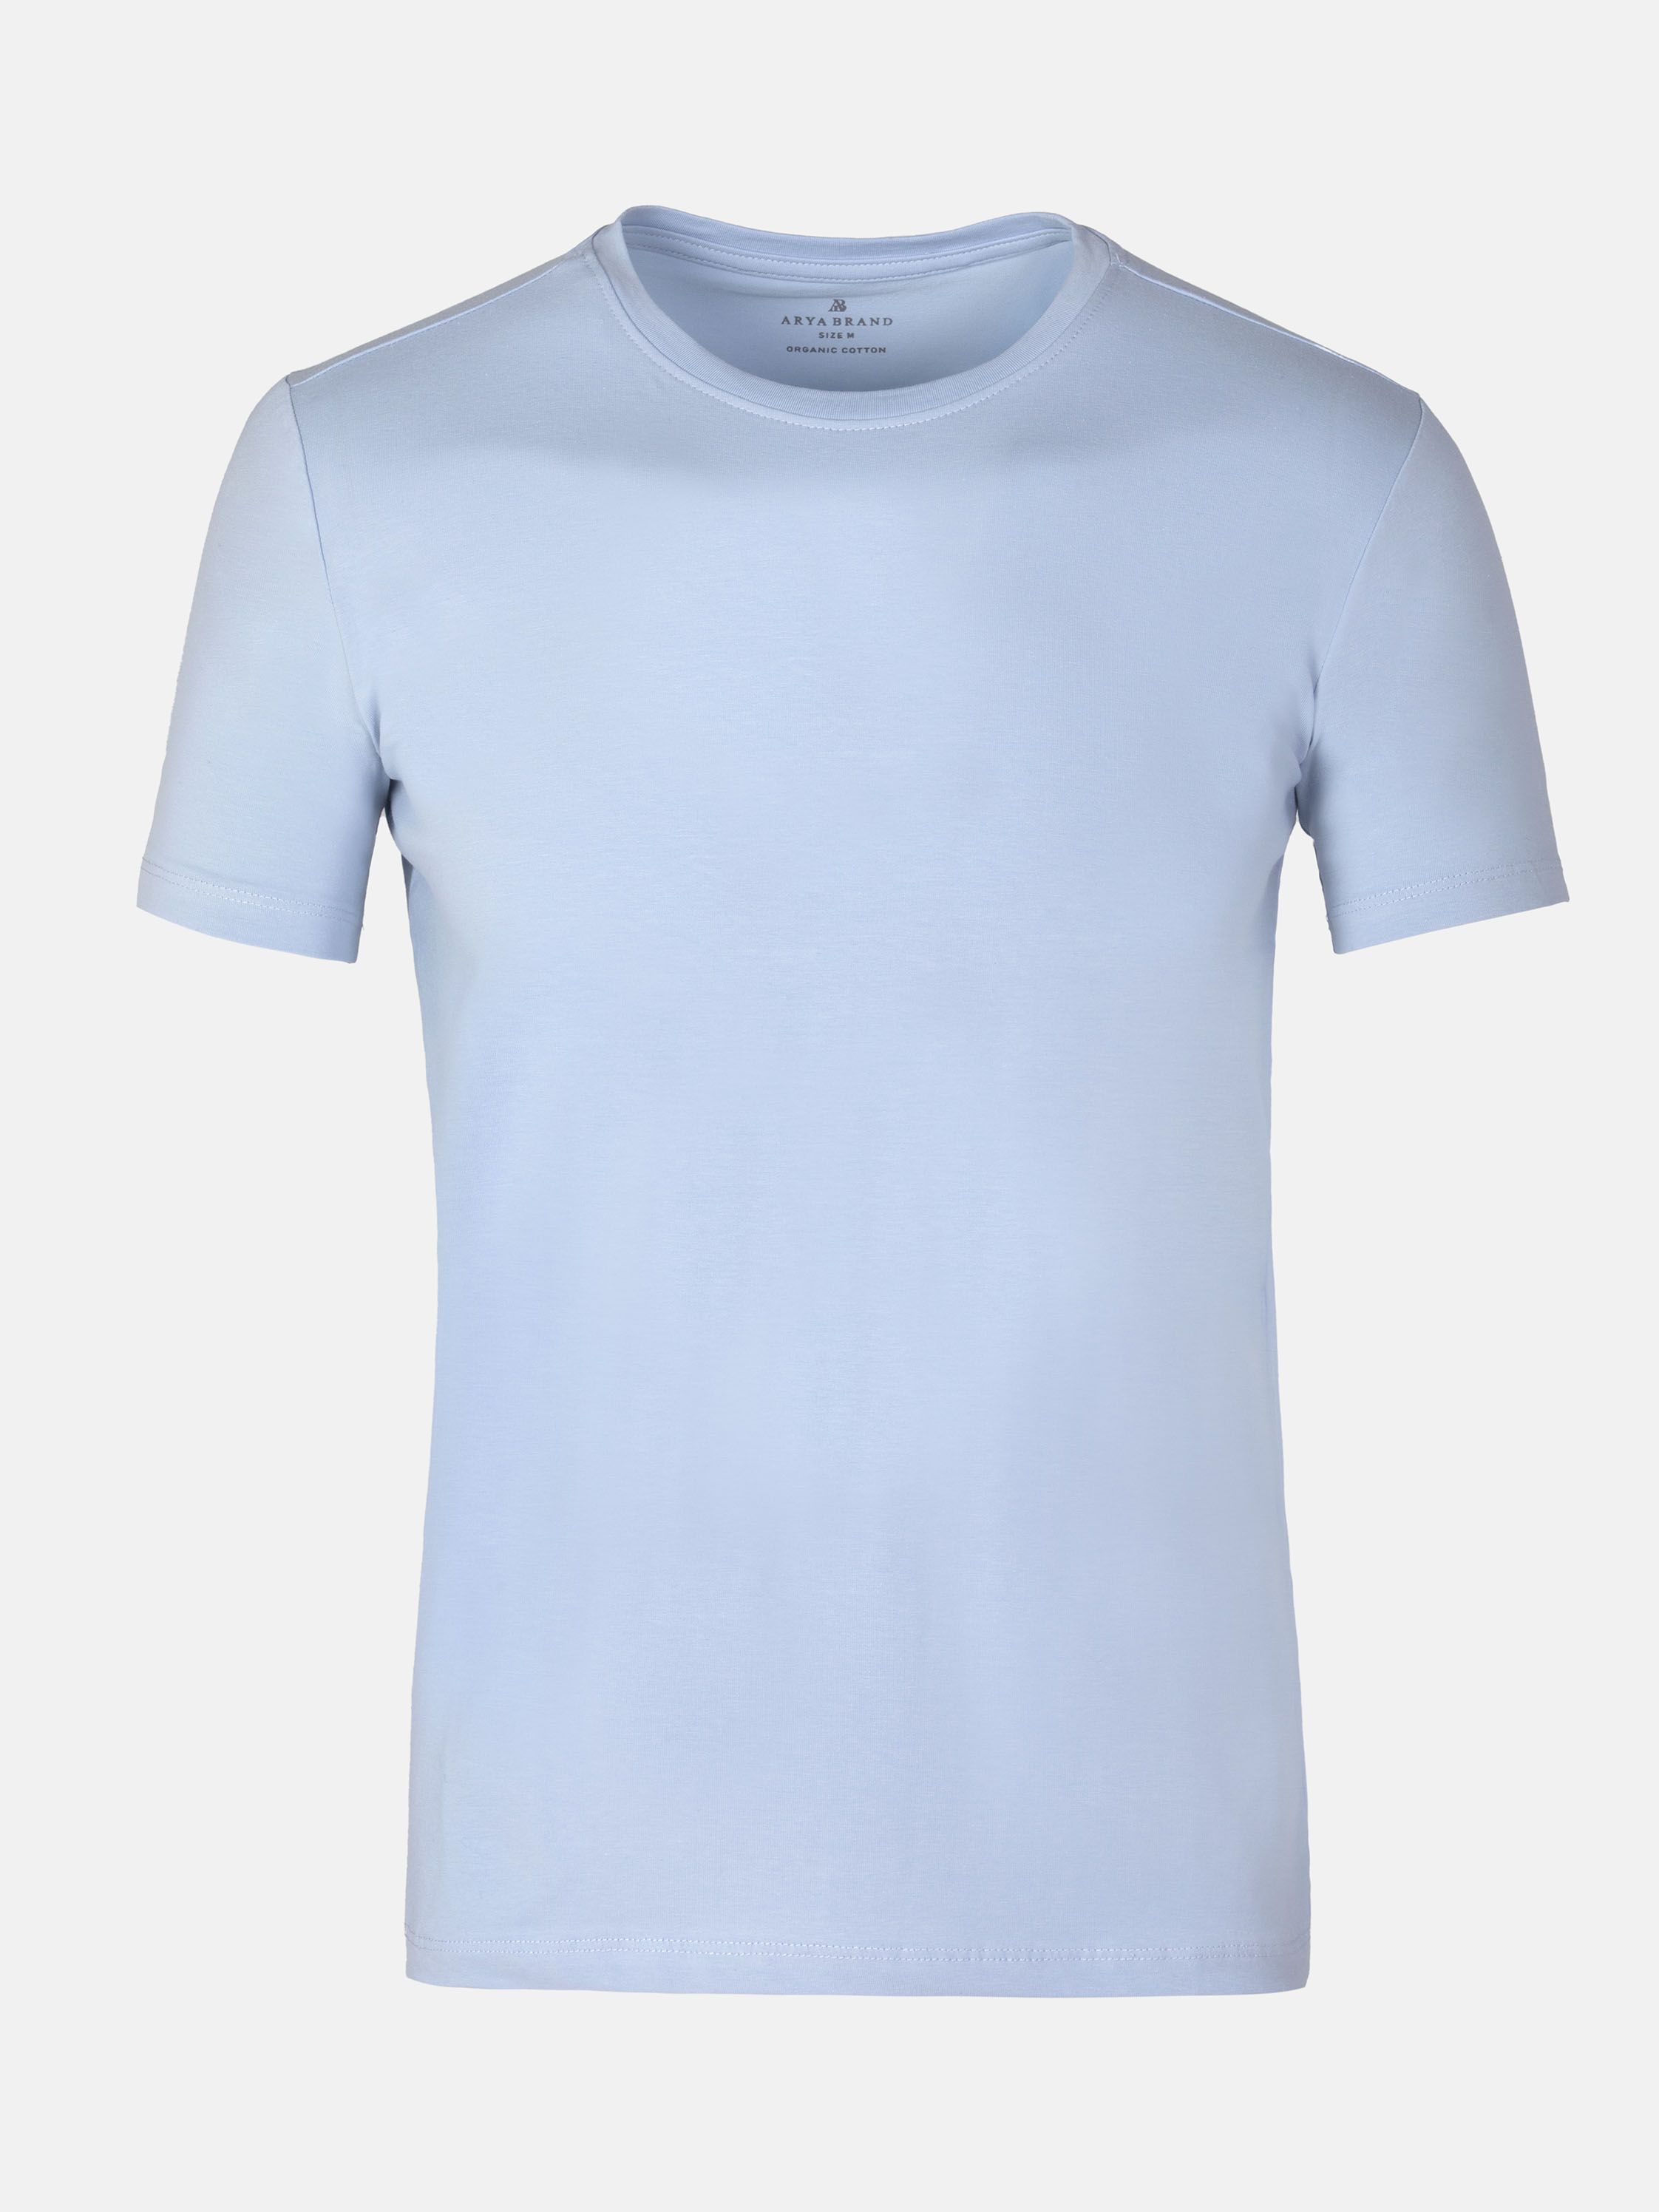 Slim Fit Light Blue T-Shirt - Light Blue Slim Fit Tee - Slim Cut Sky Blue  Shirt |WAM DENIM